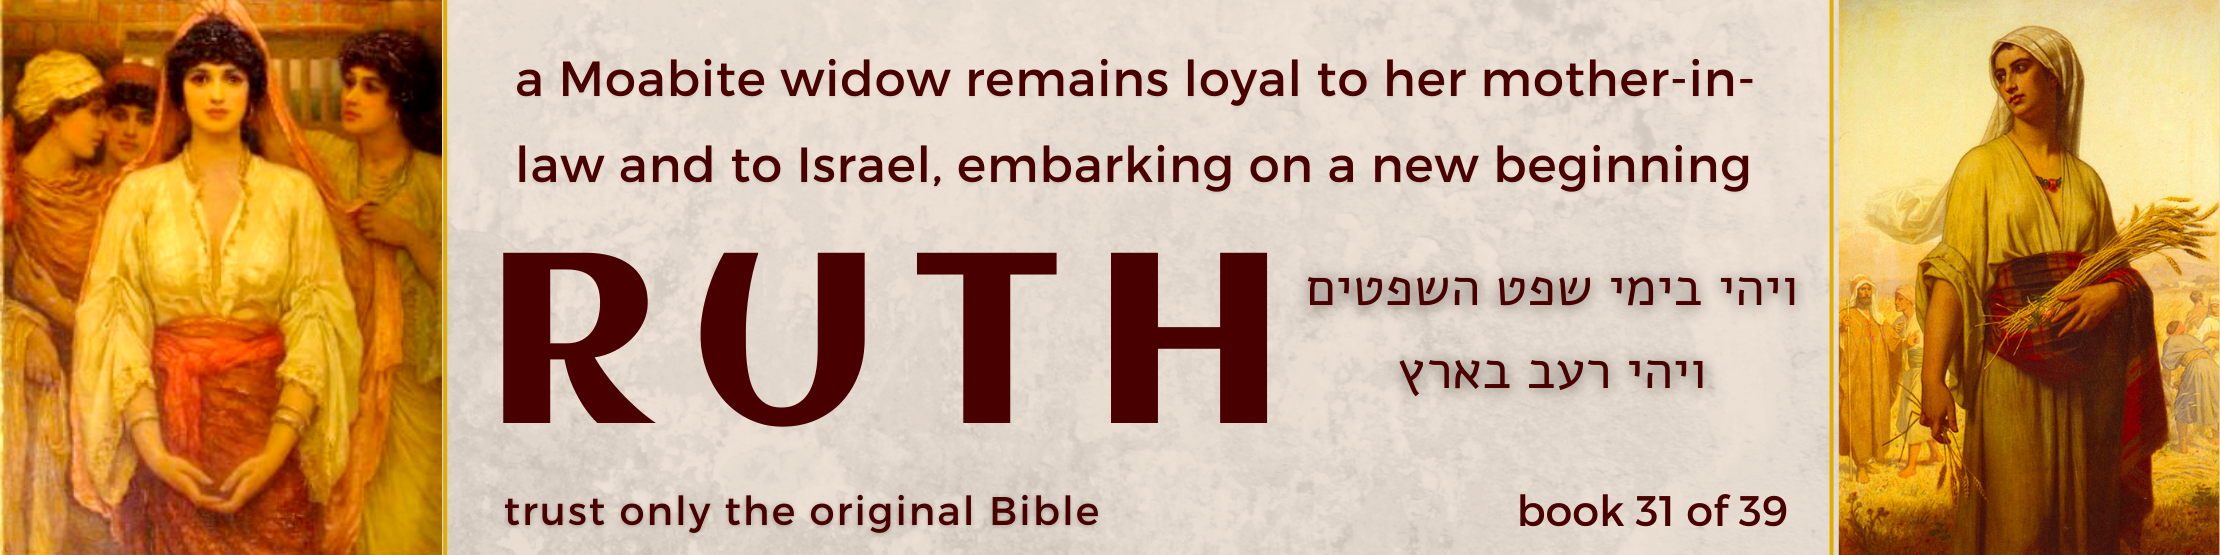 31 Ruth book - original bible - banner